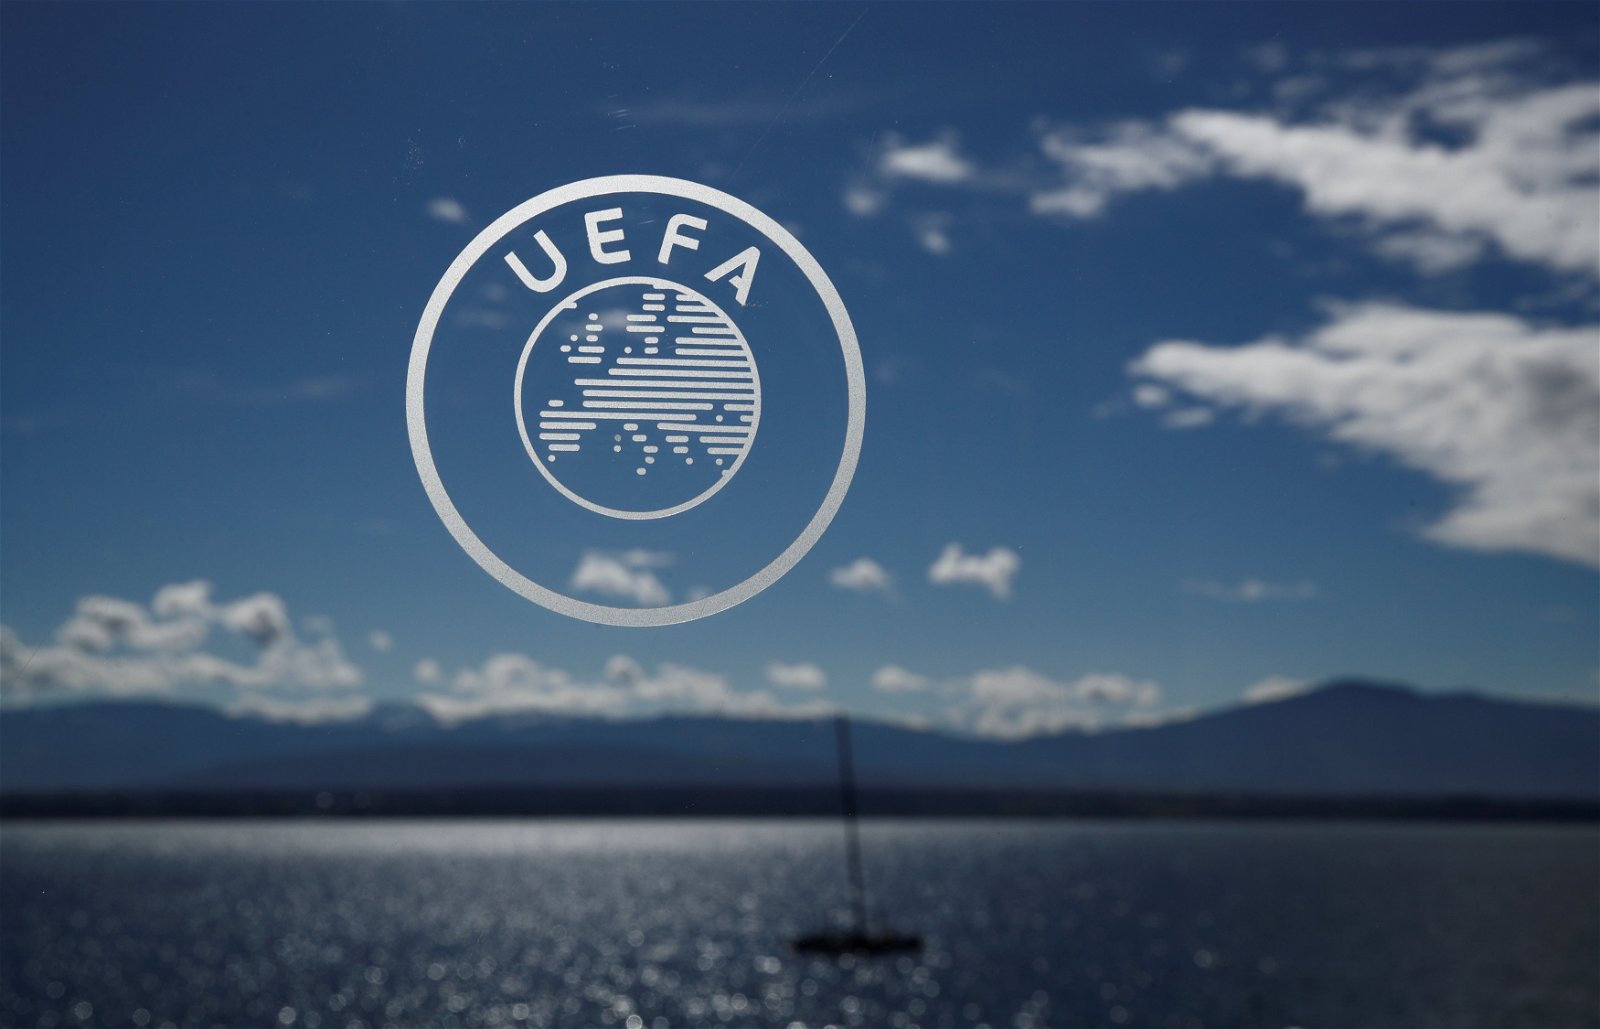 UEFA reveals Champions League finals venues through 2023 1